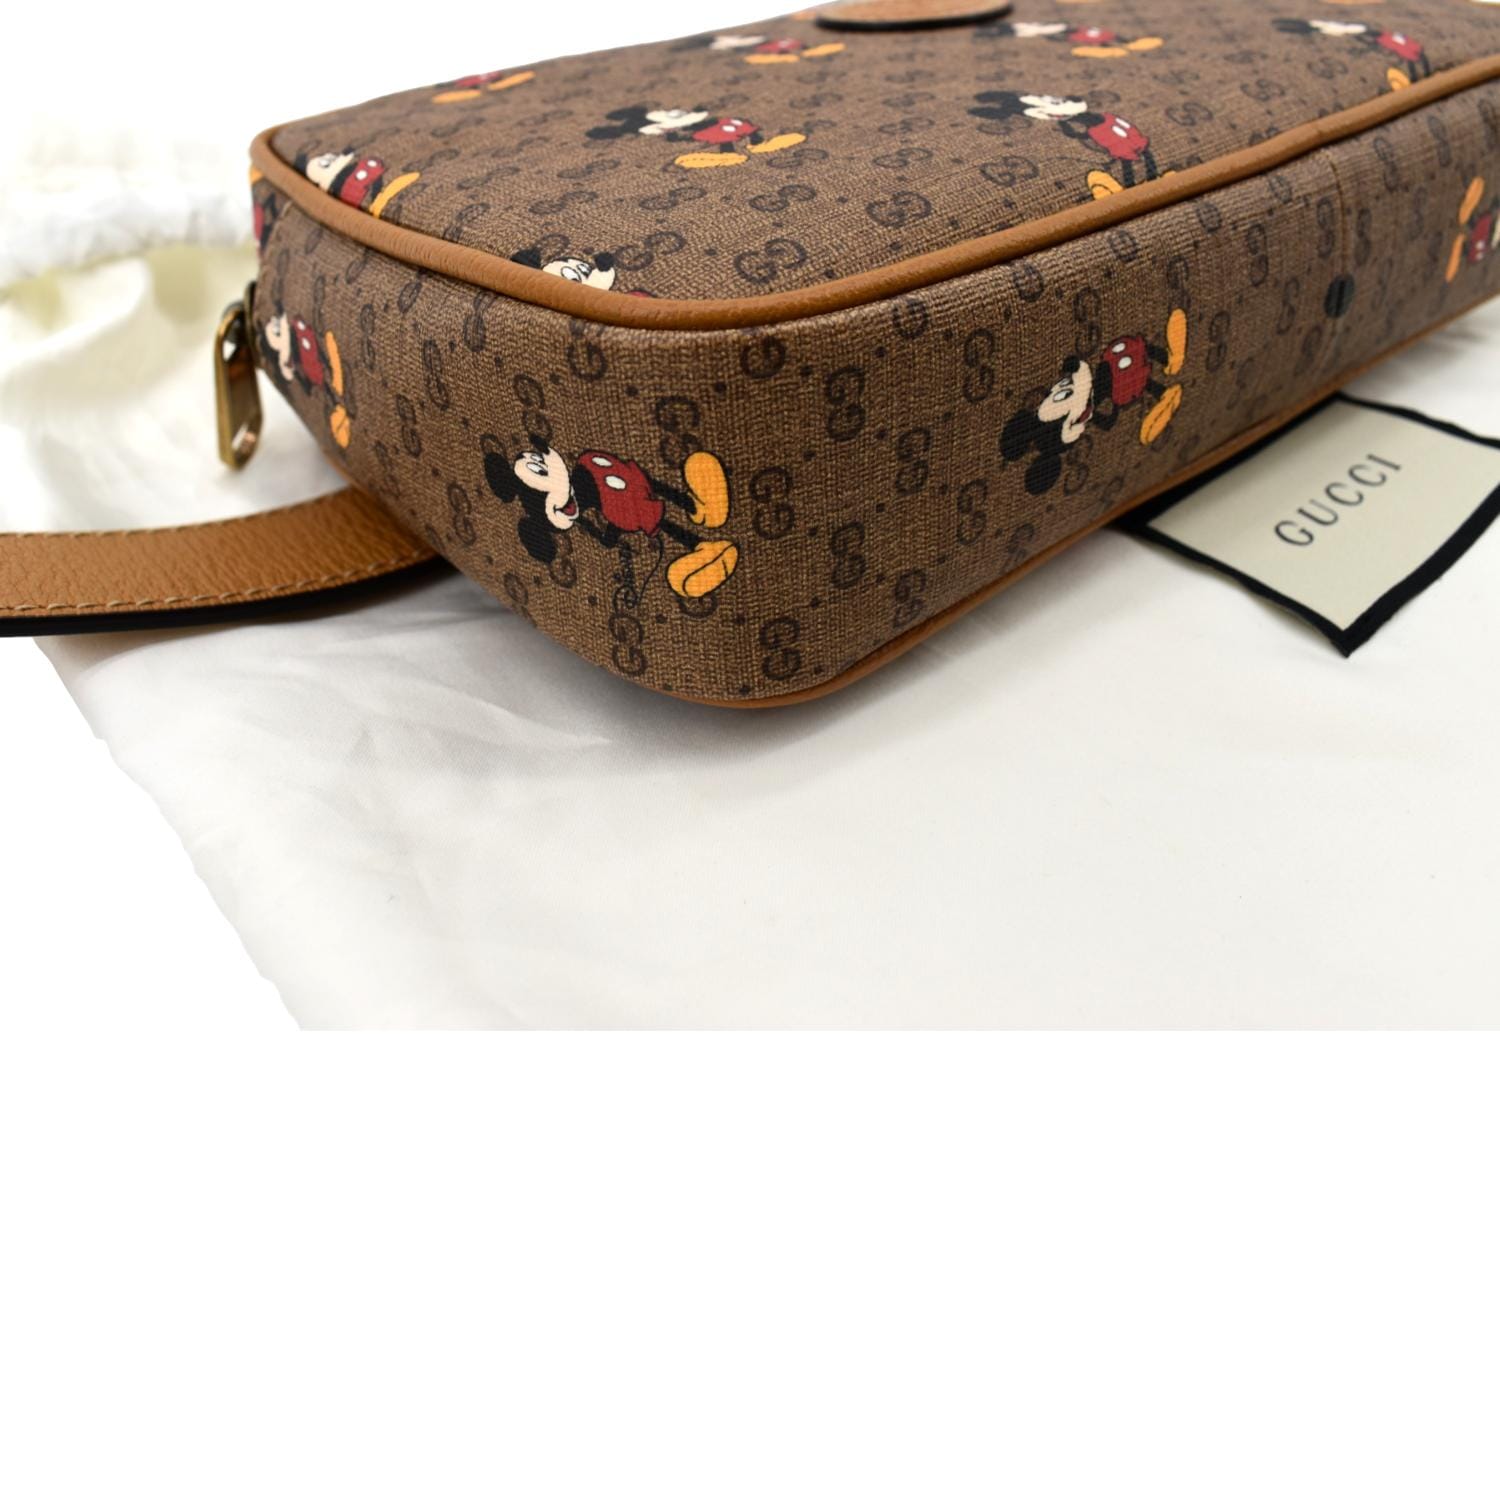 Gucci, Bags, Authentic Gucci 62695 Disney Collab Mini Gg Supreme Belt Bag  Body Bag Canvas